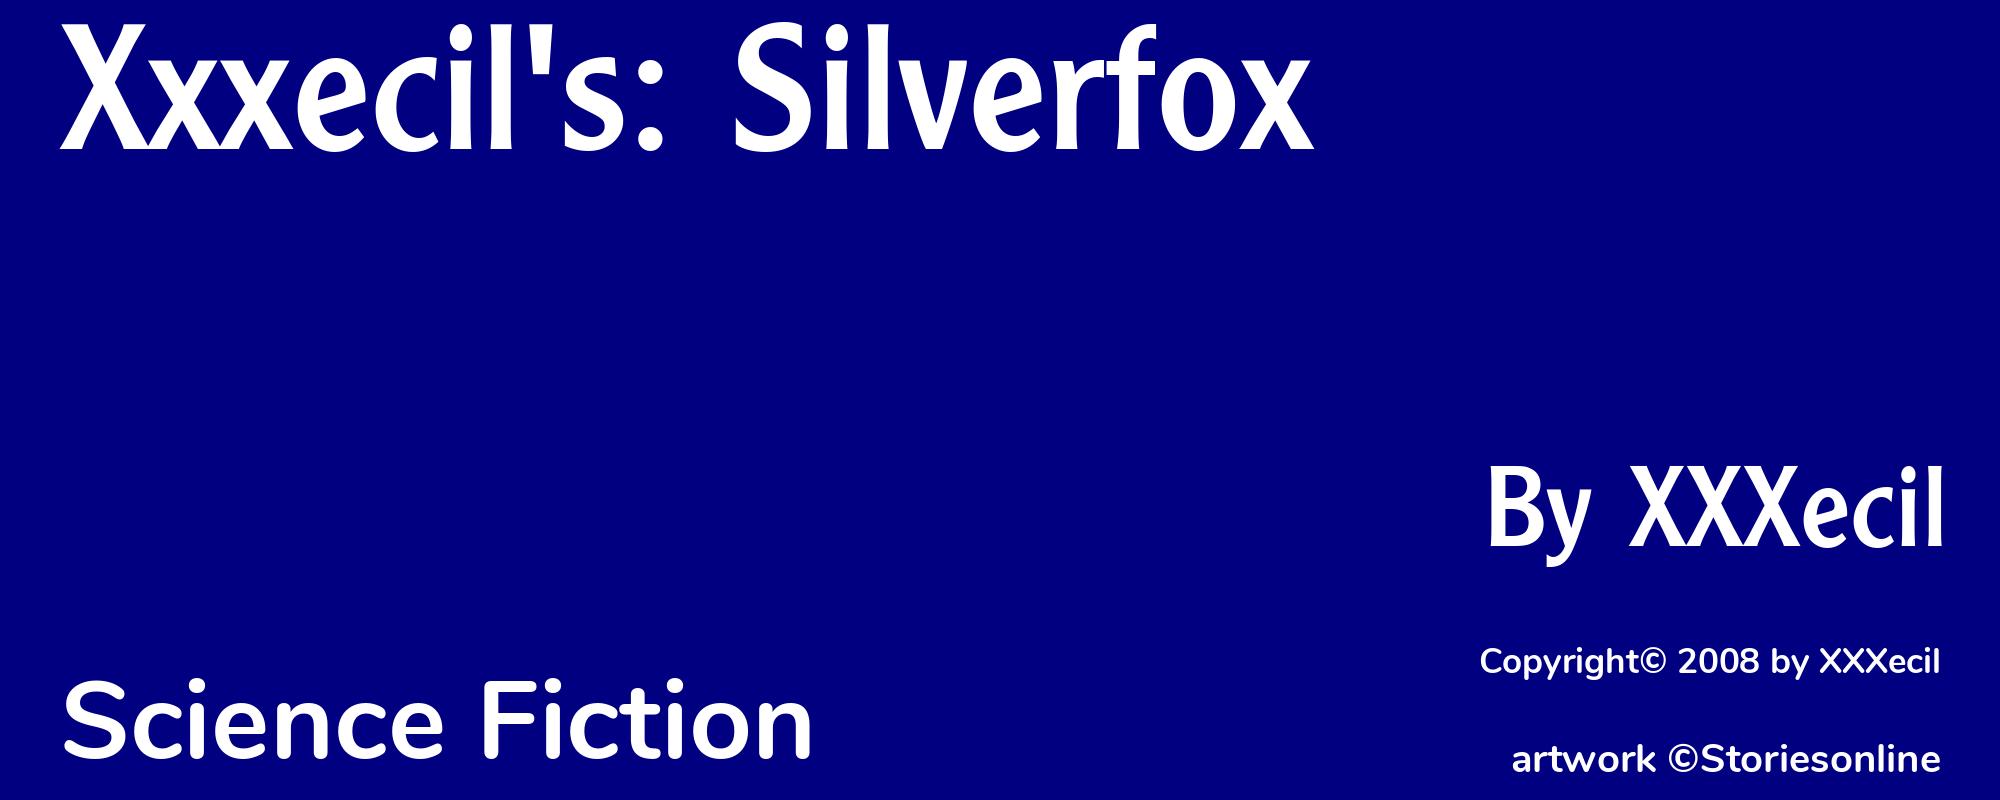 Xxxecil's: Silverfox - Cover